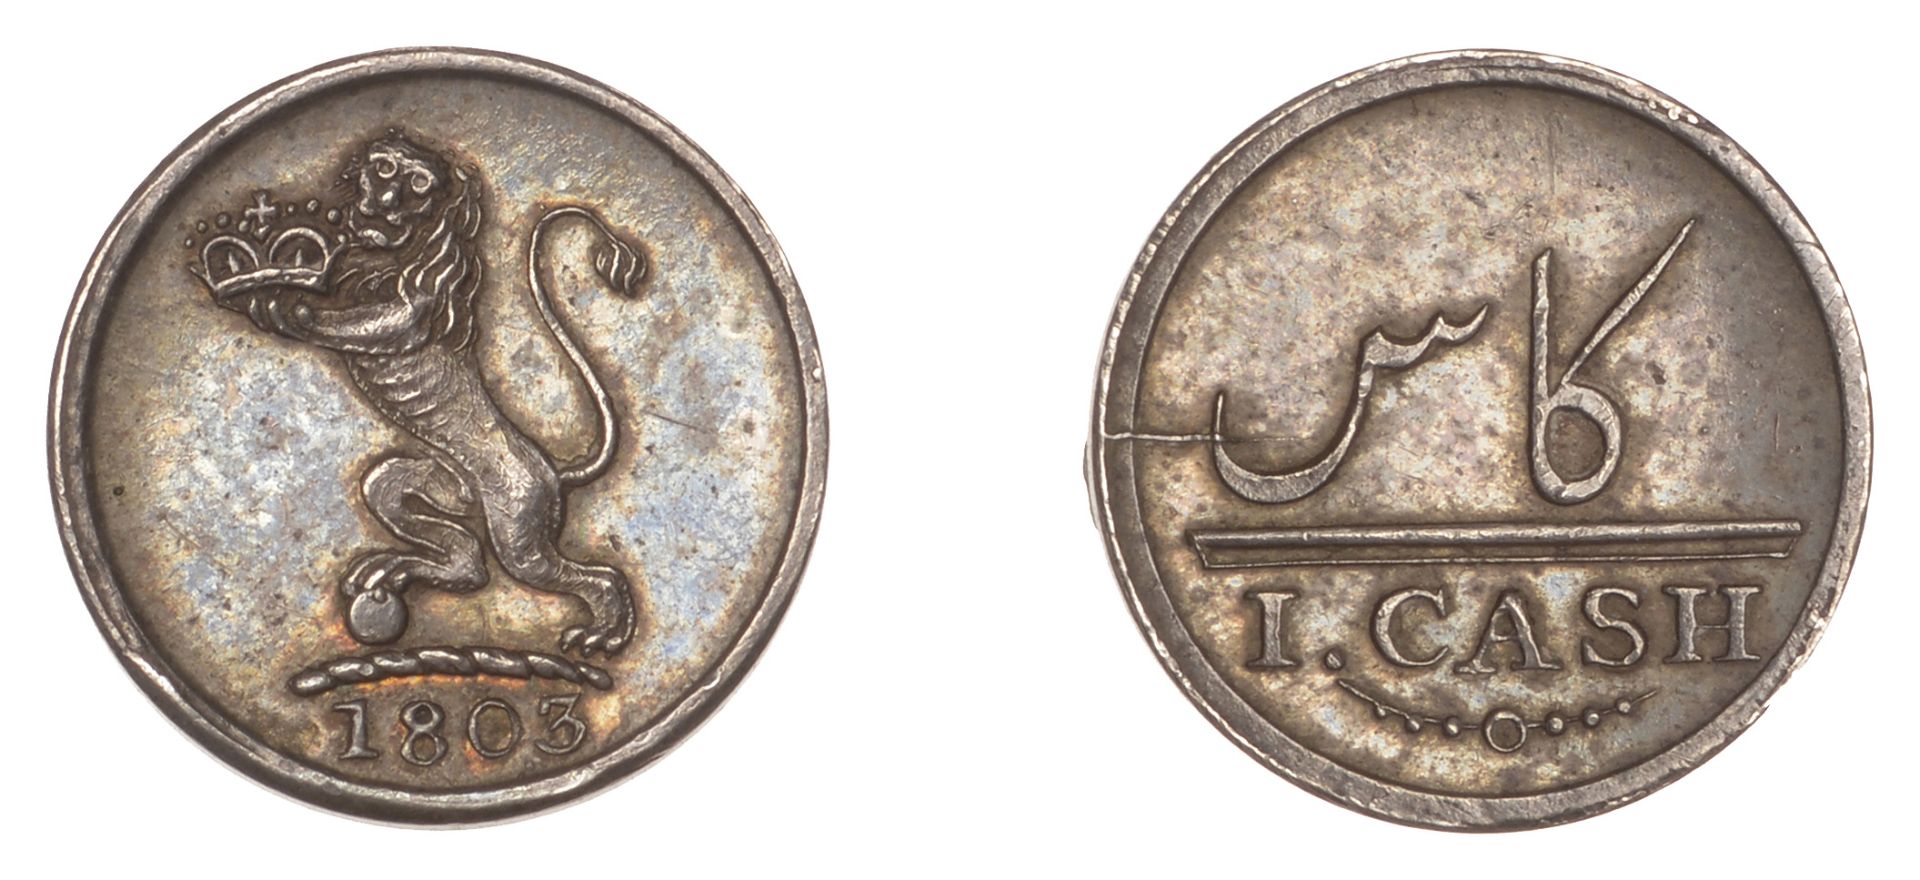 East India Company, Madras Presidency, European Minting, 1803-8, Soho, silver Proof Cash, ra...